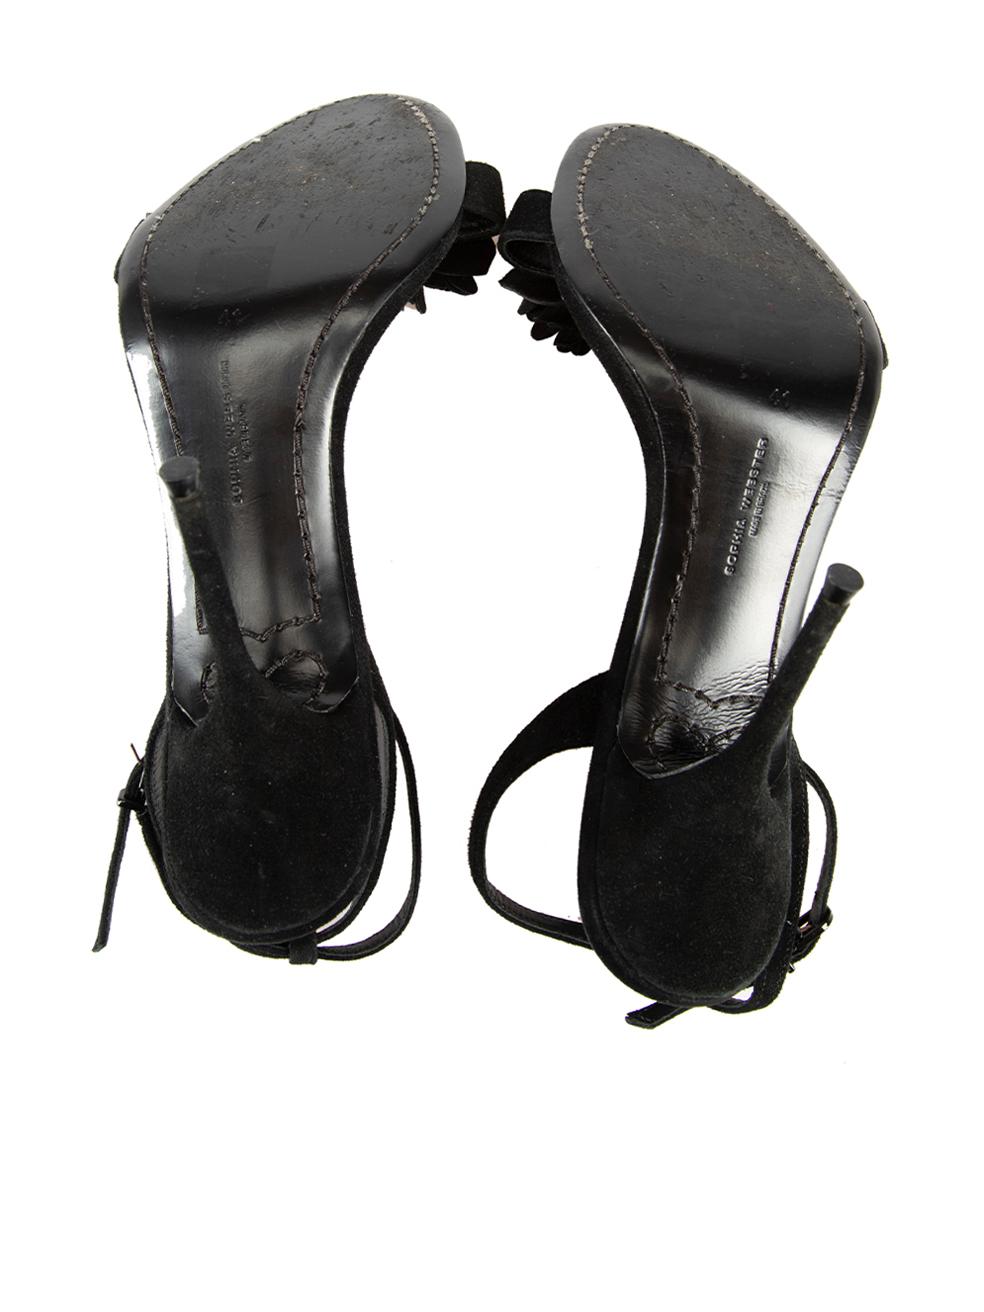 Women's Sophia Webster Black Suede Flower Accent Sandals Size IT 41